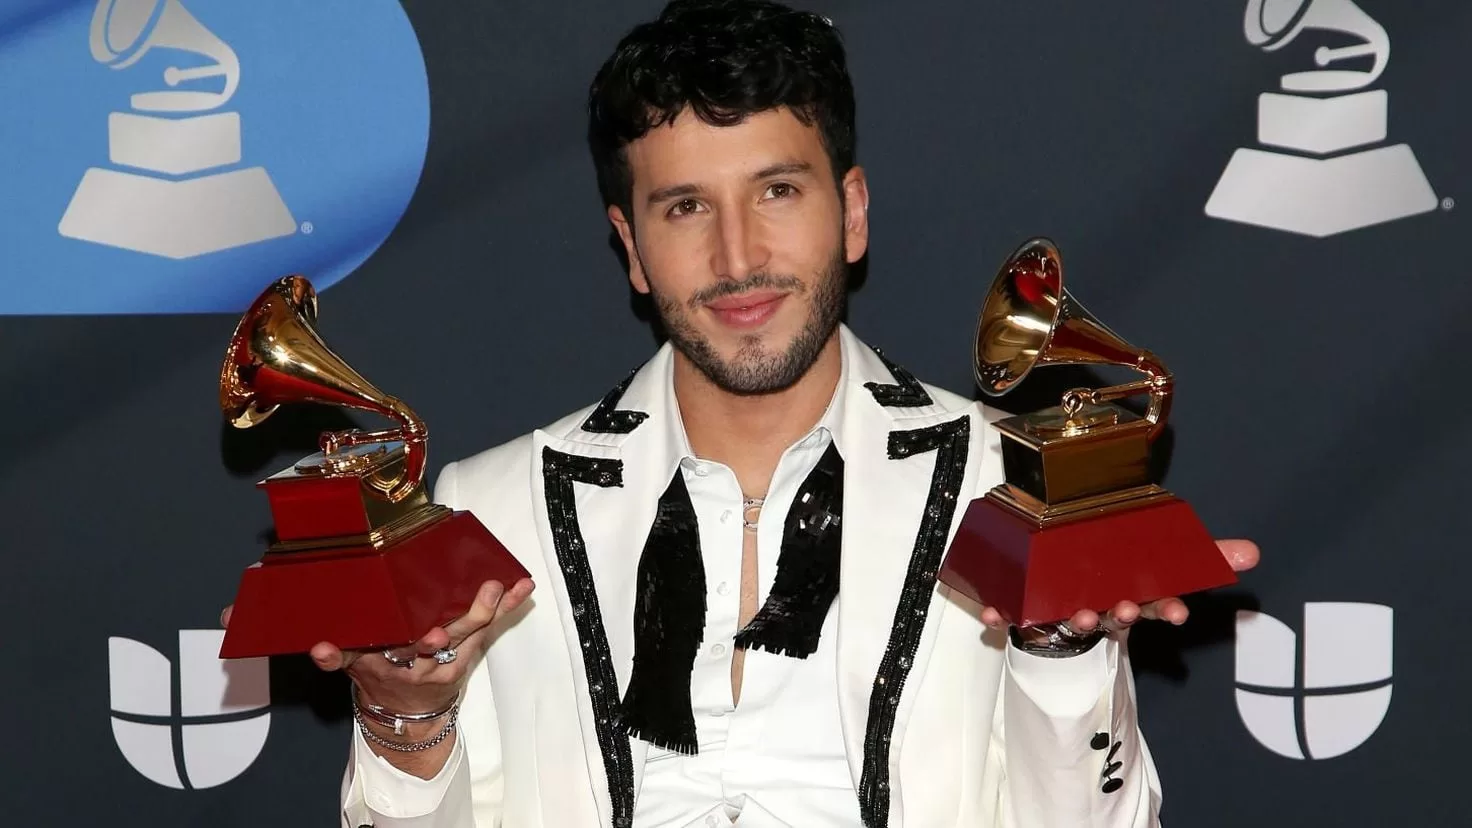 How much money does each artist get for winning a 2023 Latin Grammy Award?
